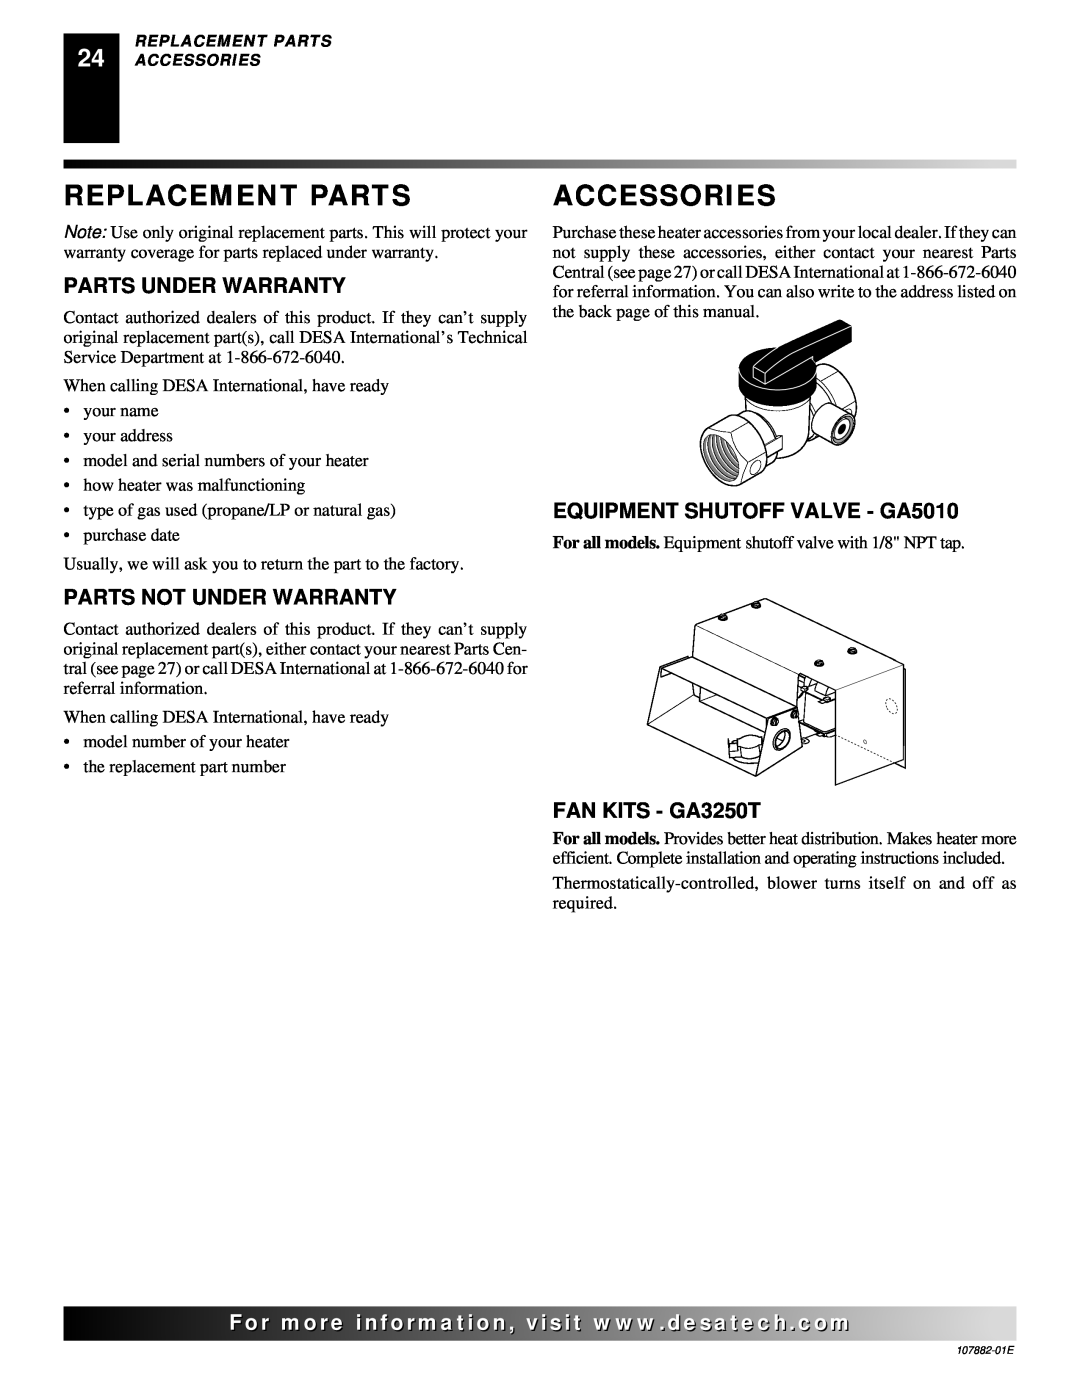 Desa Tech CBP20 Replacement Parts, Accessories, Parts Under Warranty, EQUIPMENT SHUTOFF VALVE - GA5010, FAN KITS - GA3250T 